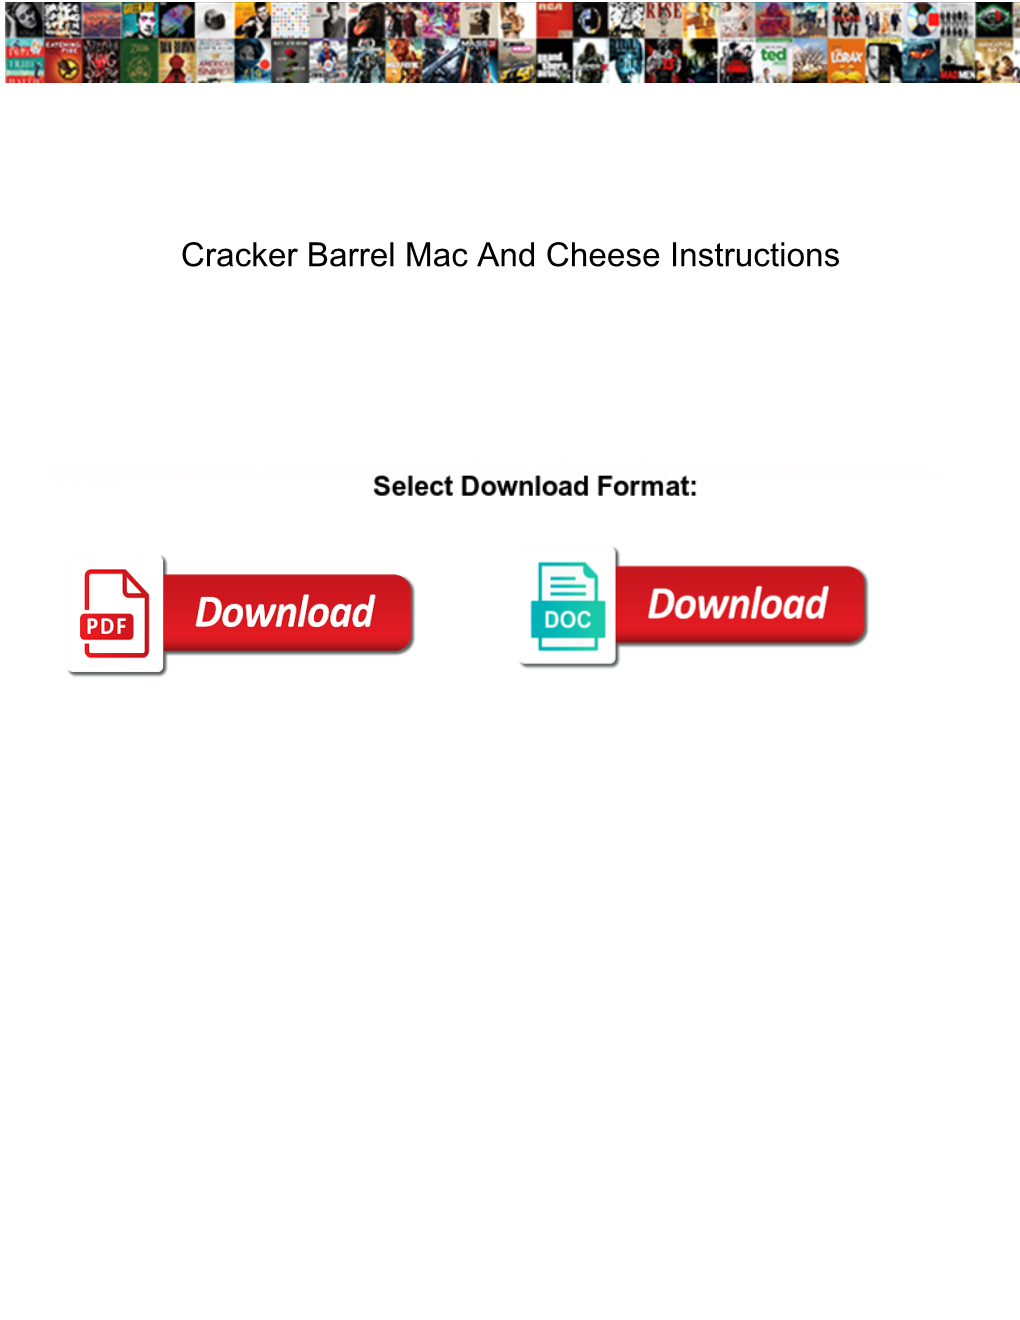 Cracker Barrel Mac and Cheese Instructions